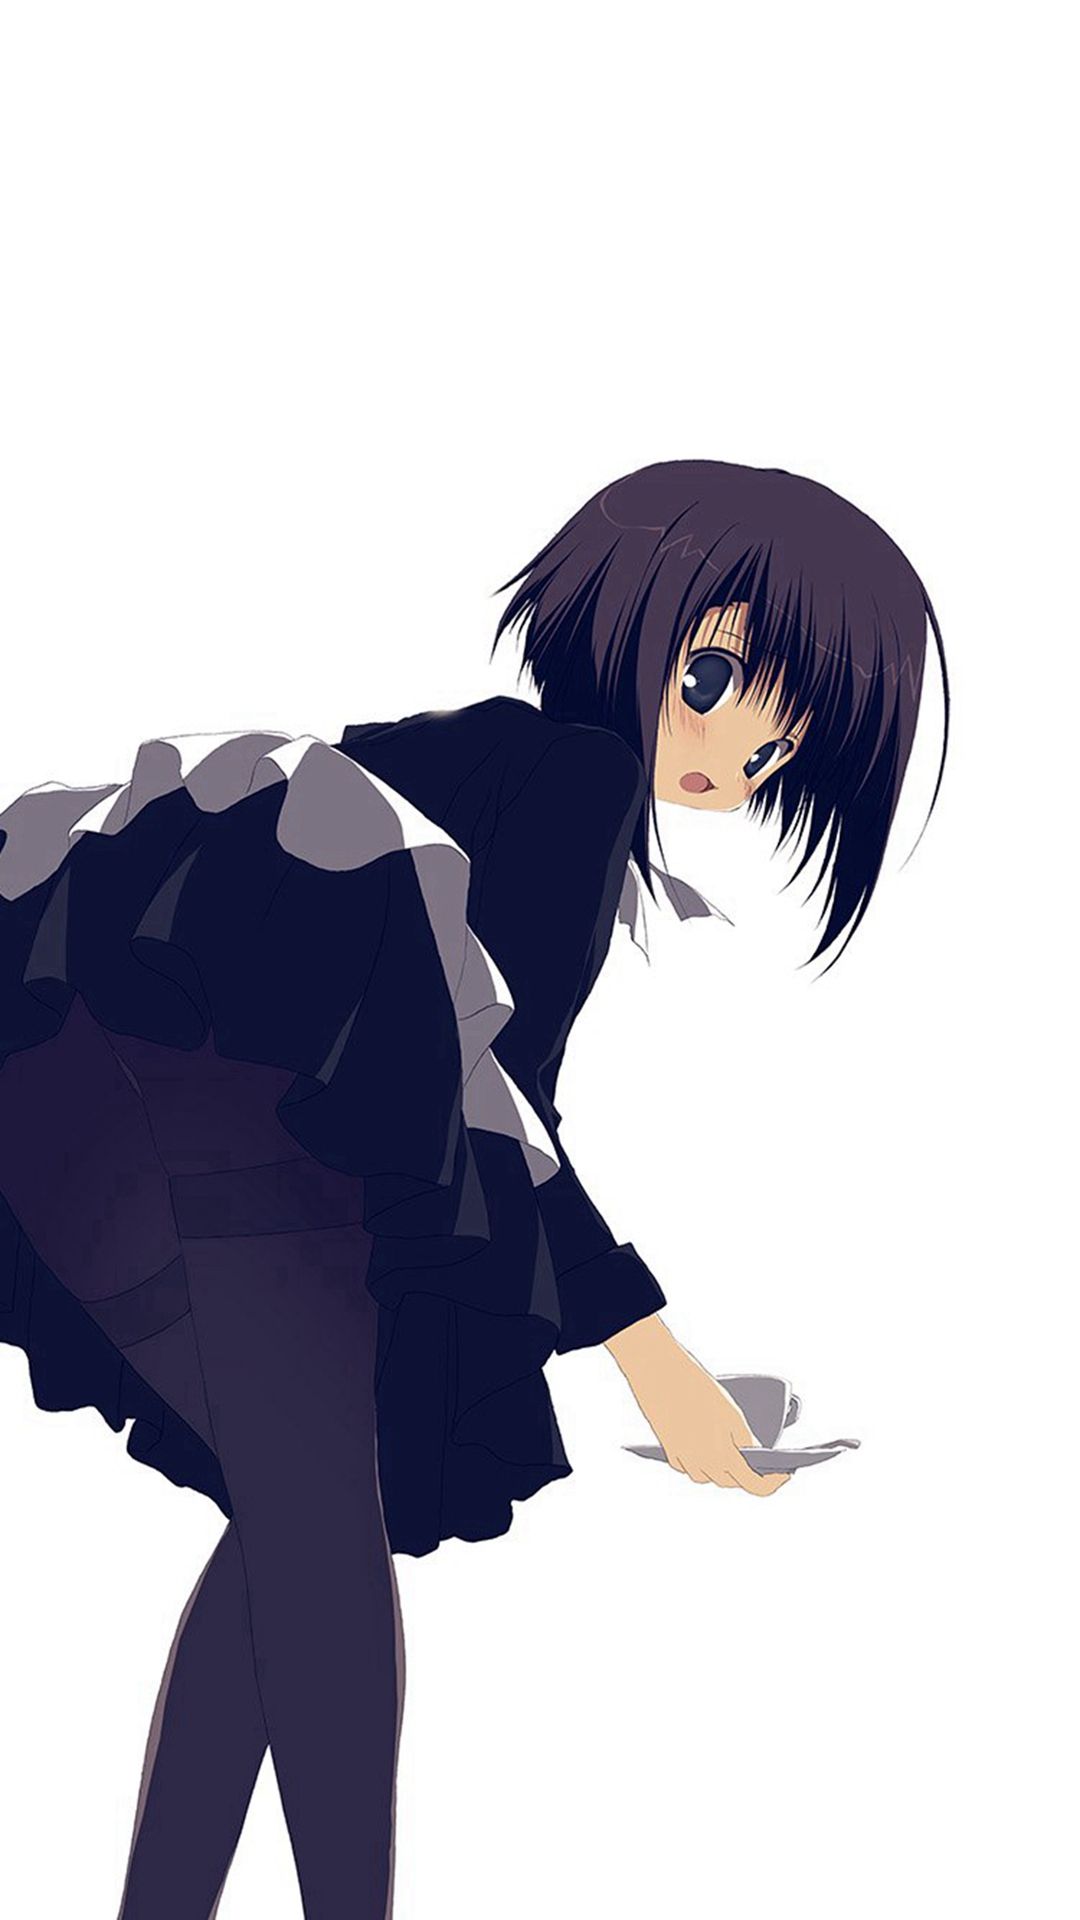 Girl Anime Black Dress Cute Illustration Art Japanese iPhone 8